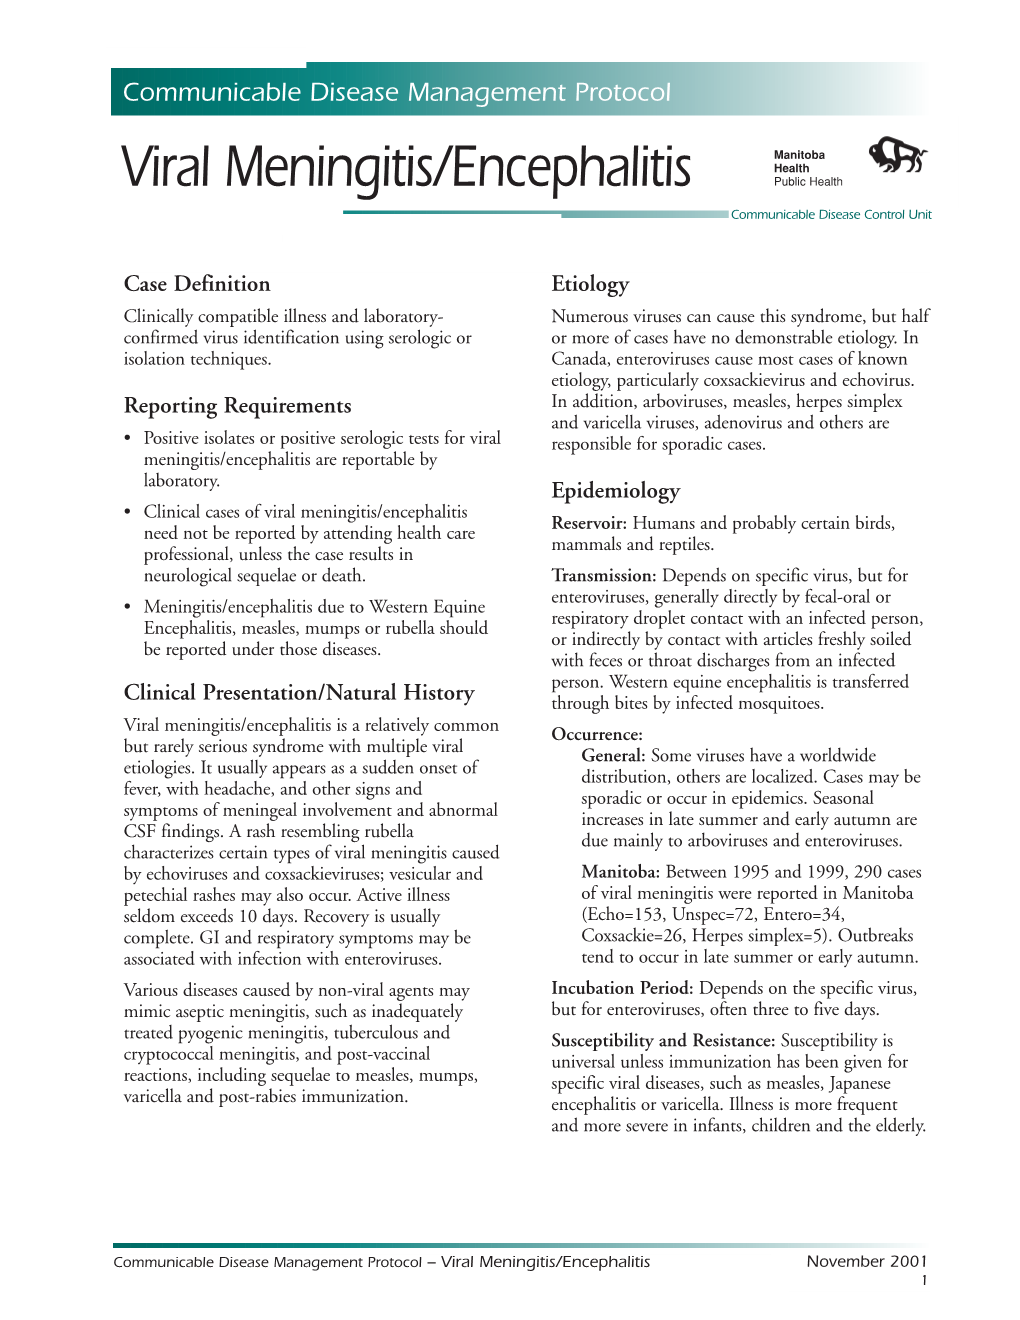 Viral Meningitis/Encephalitis Public Health Communicable Disease Control Unit